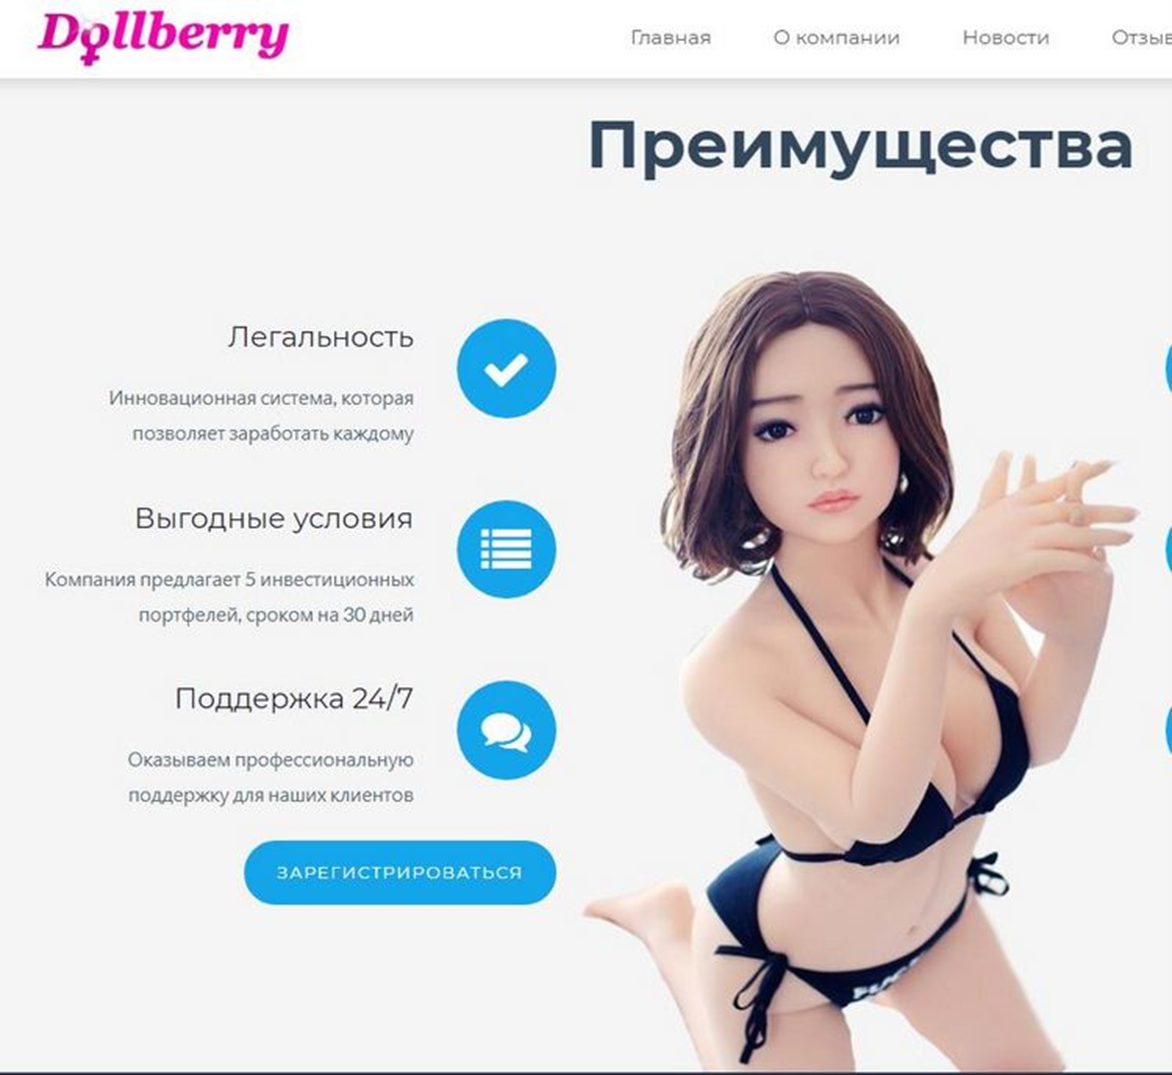 Олег Анисимов: Dollberry - мошенники собирают деньги на производство секс-кукол